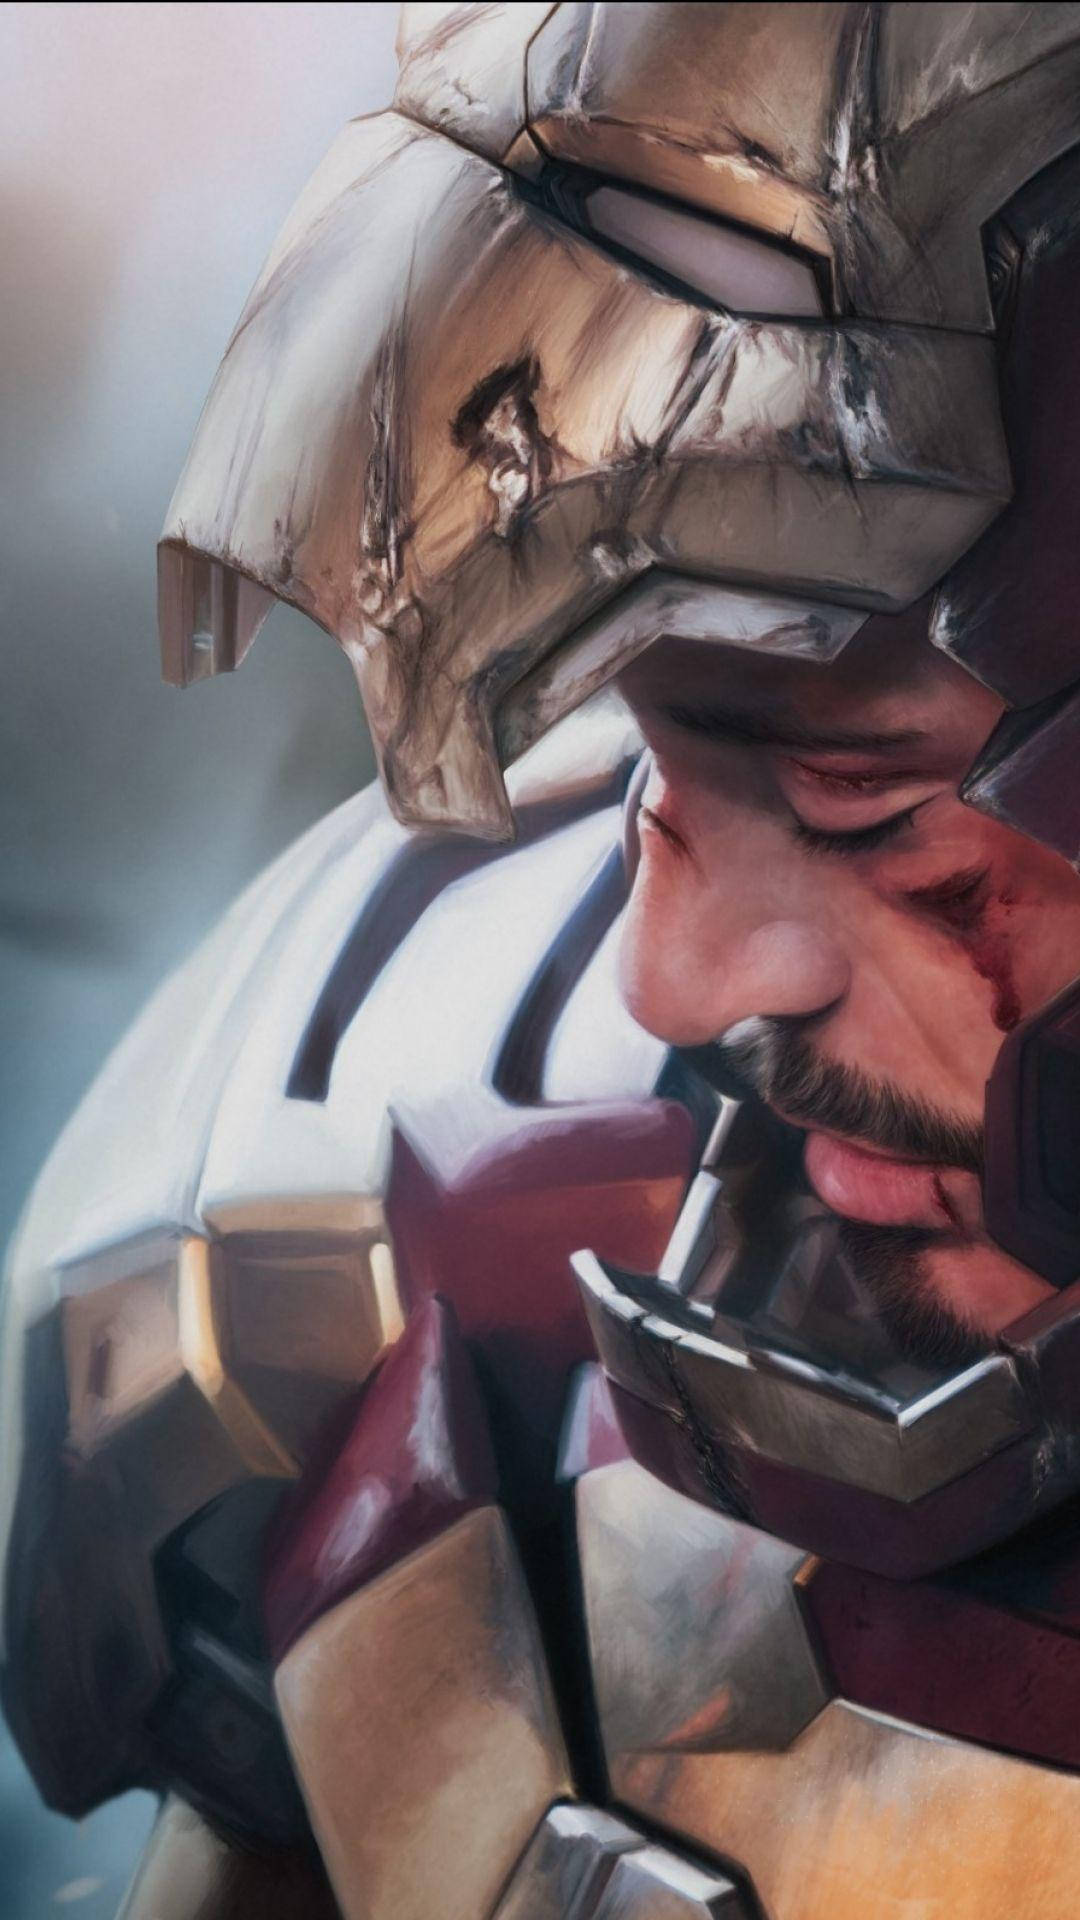 Tony Stark Iron Man Iphone